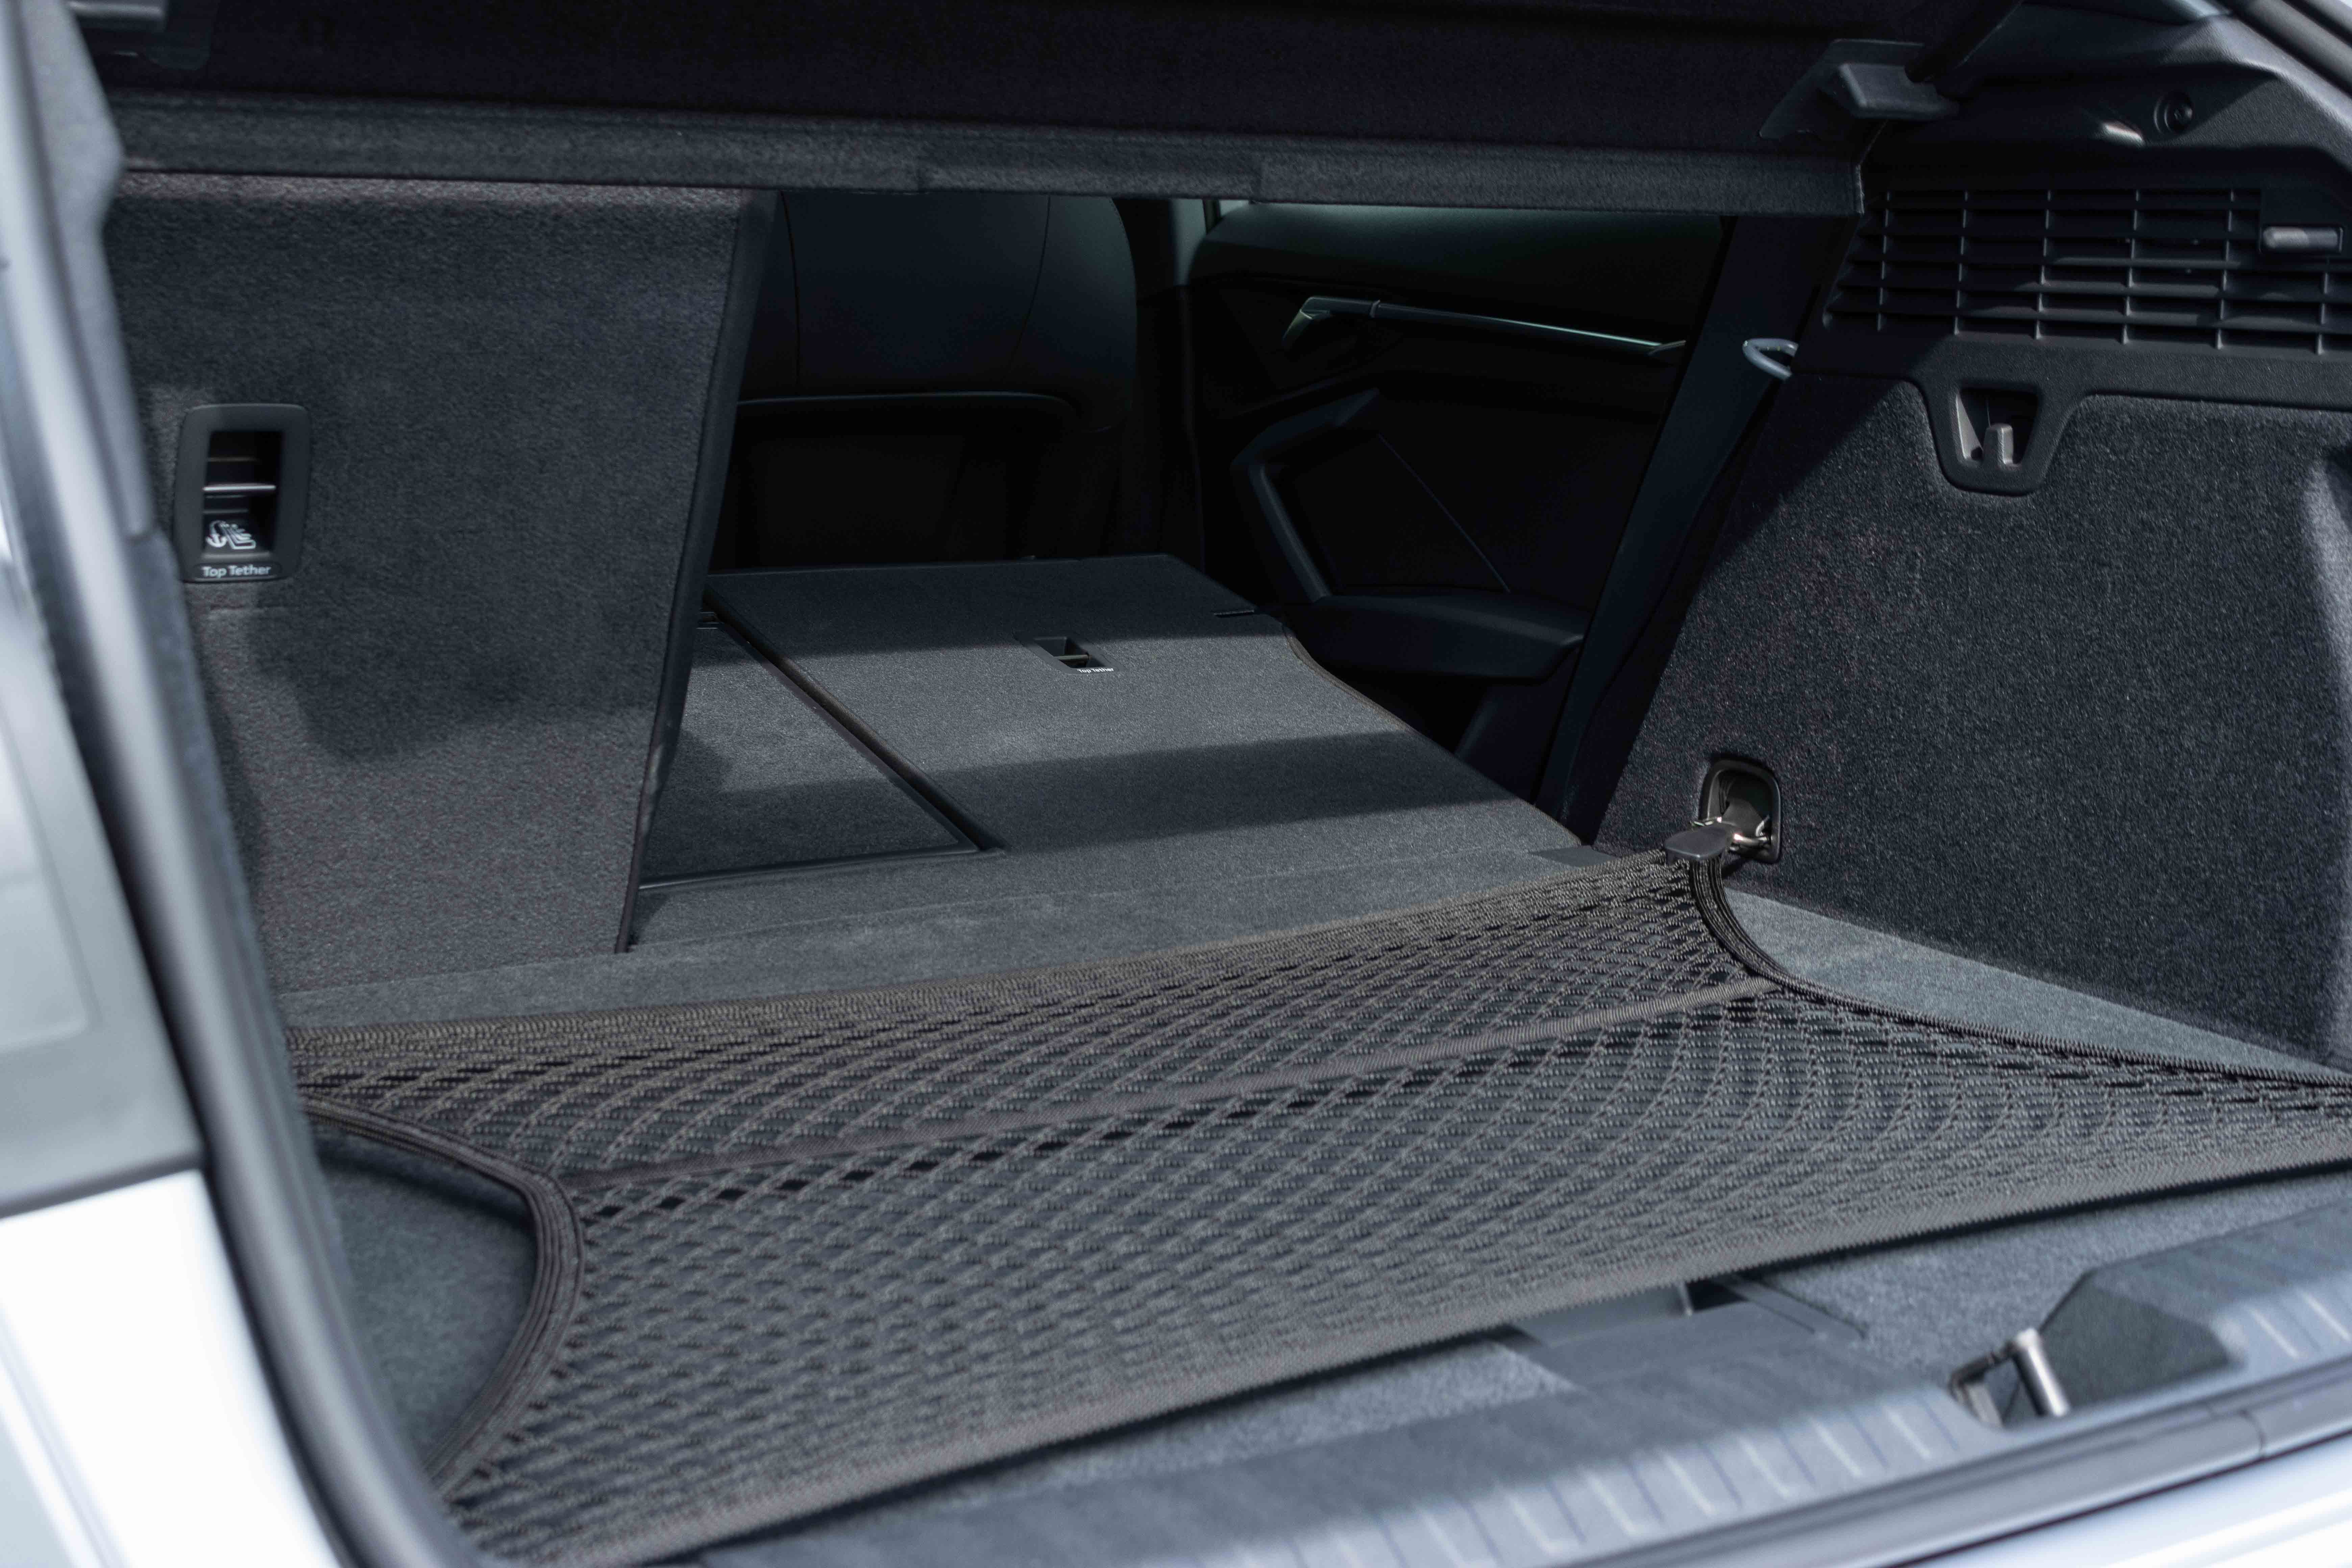 2022 Audi A3 Sportback 1.0 TFSI S tronic Singapore - Boot